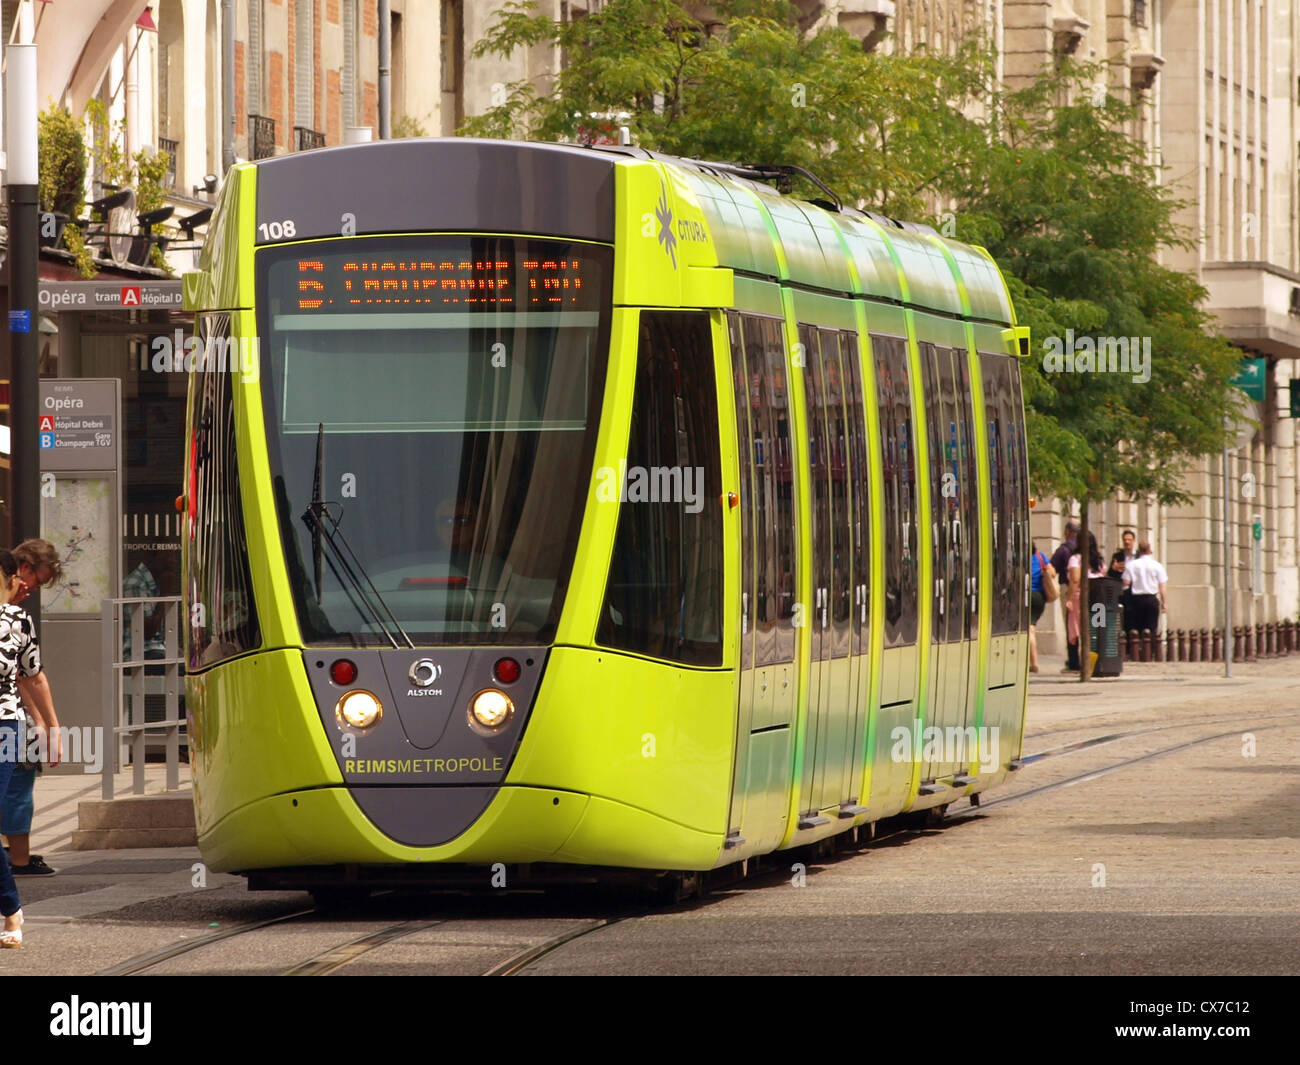 Alsrom tram green wagon 108 of the Reimsmetropole. Stock Photo